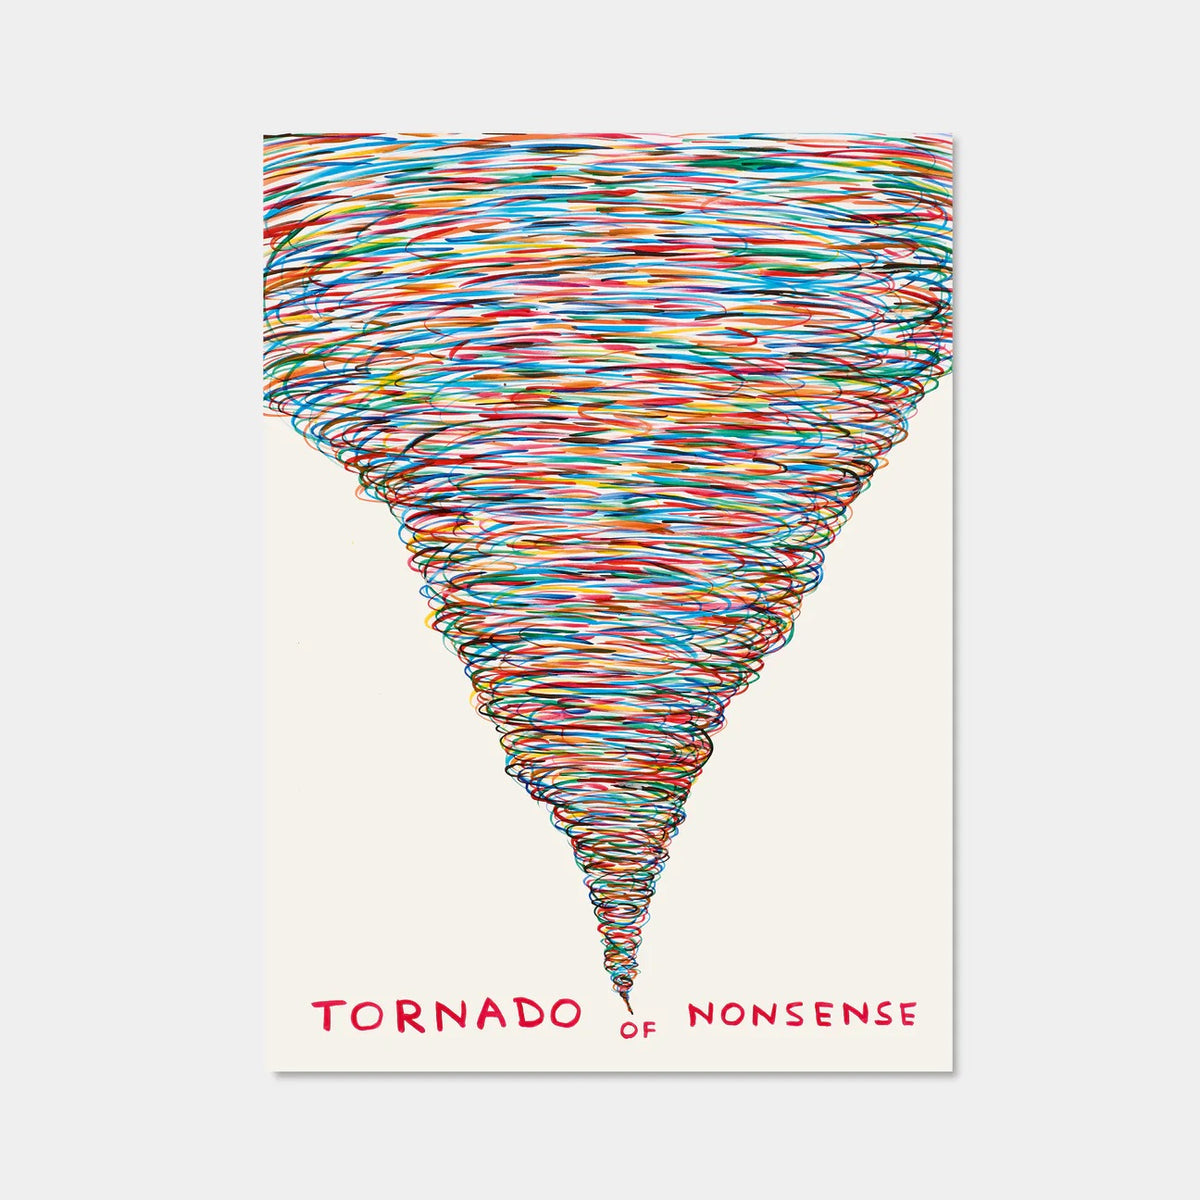 Tornado of Nonsense by David Shrigley